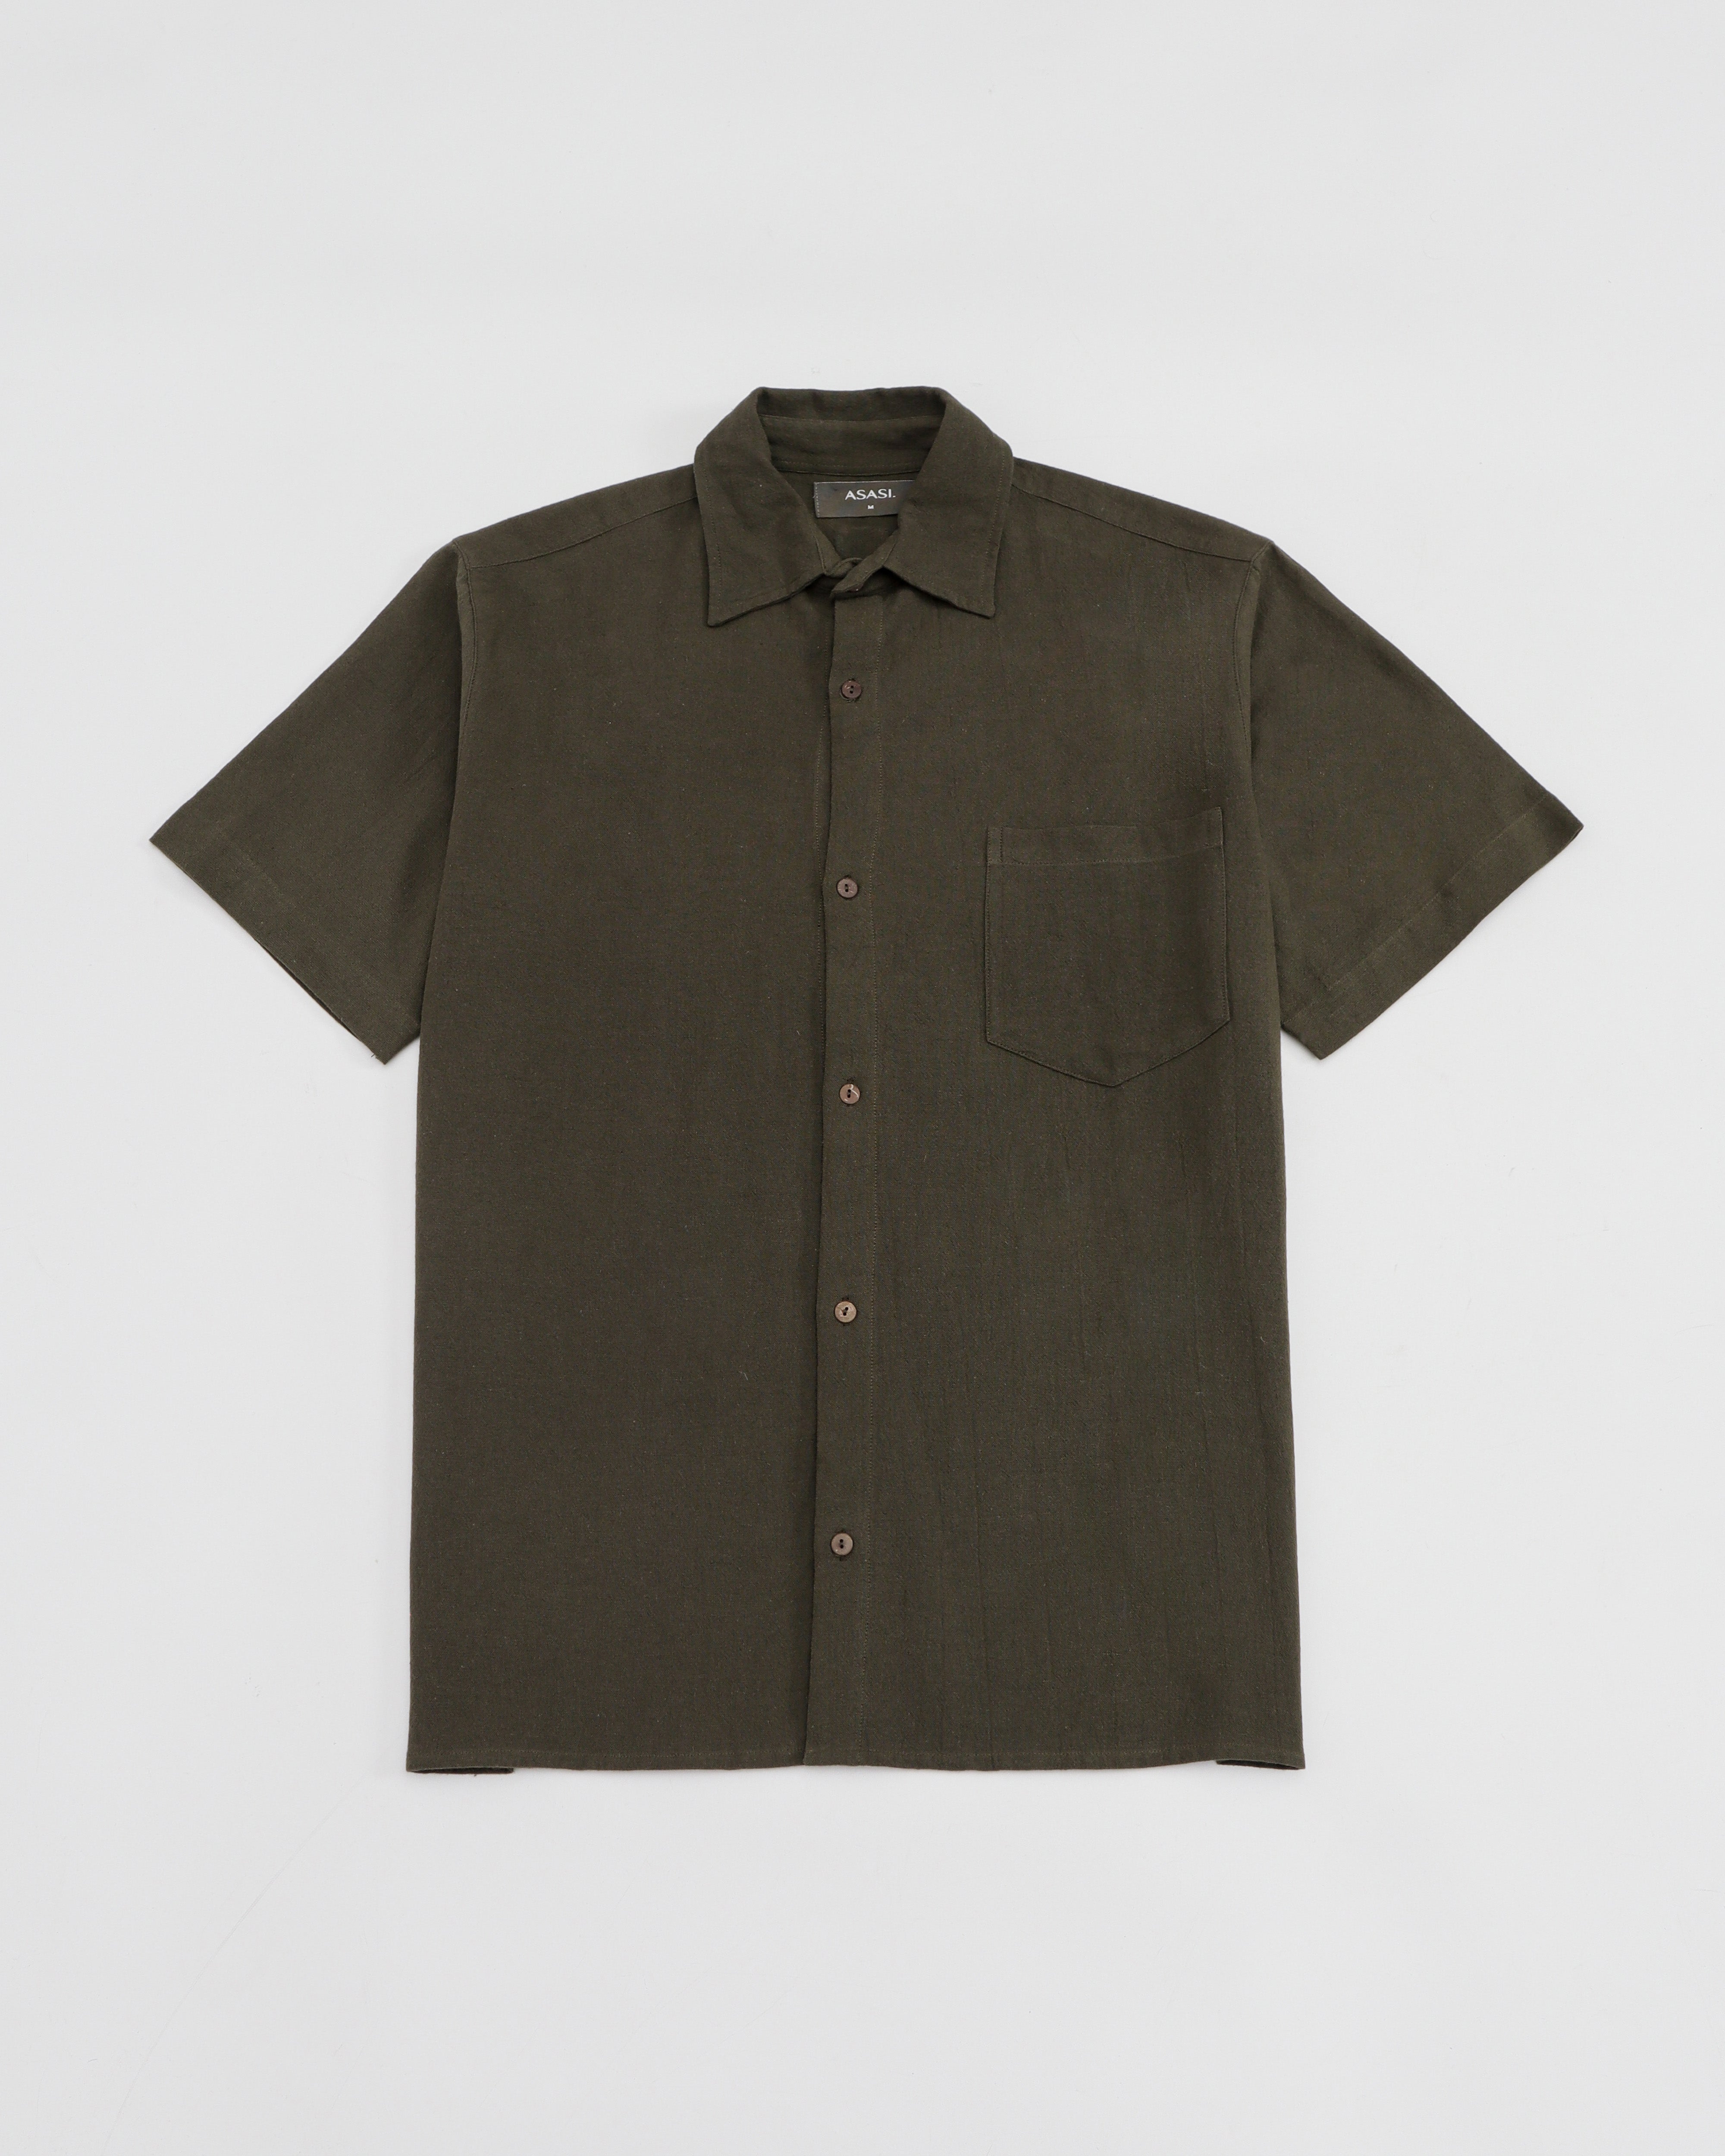 Origin Shirt - Sierra Olive Short Sleeve